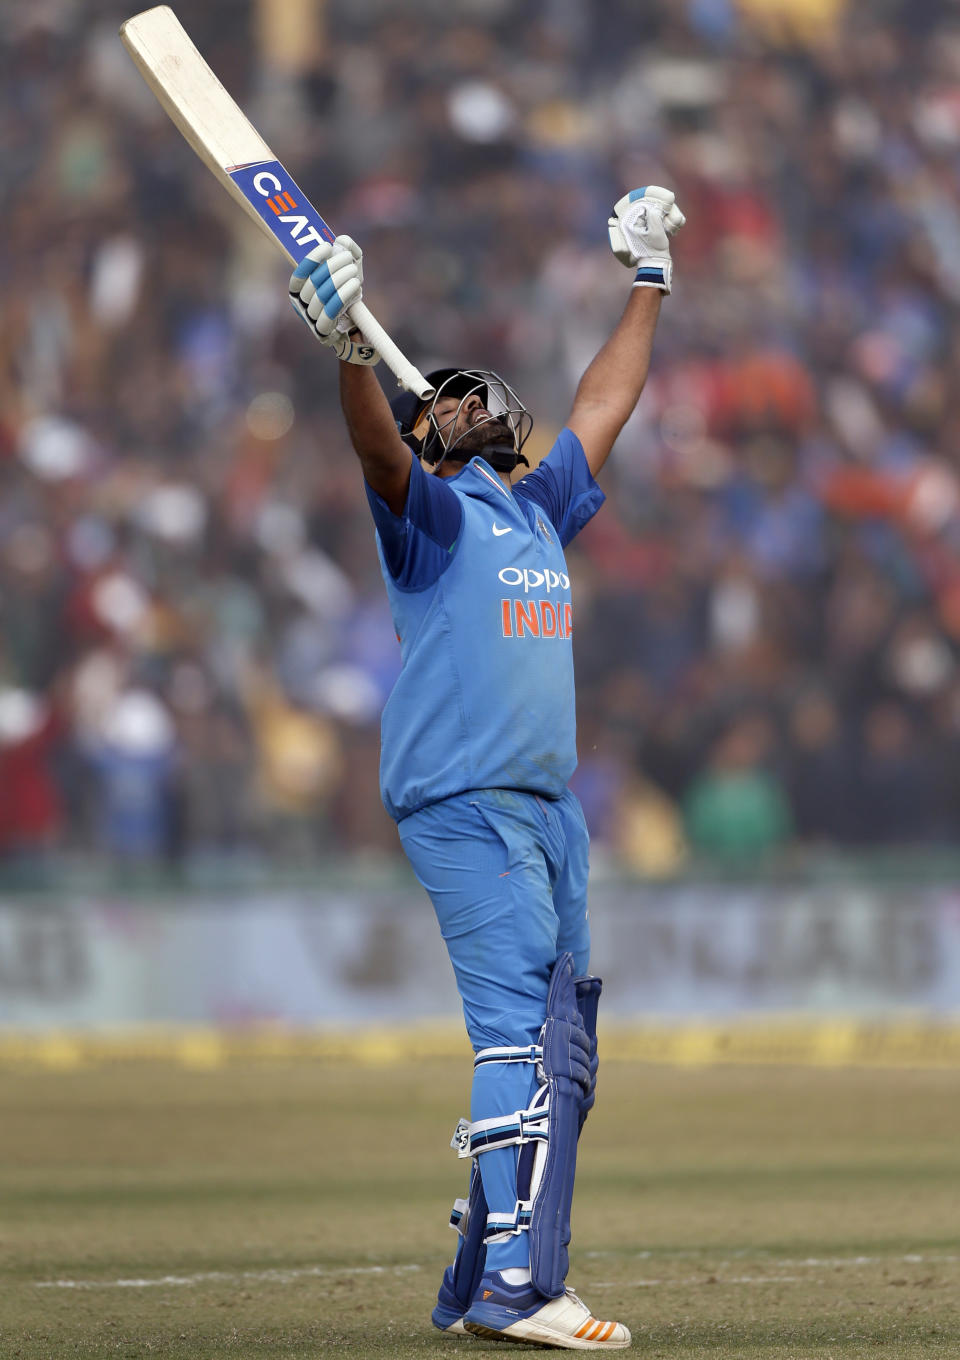 Along with Virat Kohli, Rohit Sharma is India’s premier ODI batsman